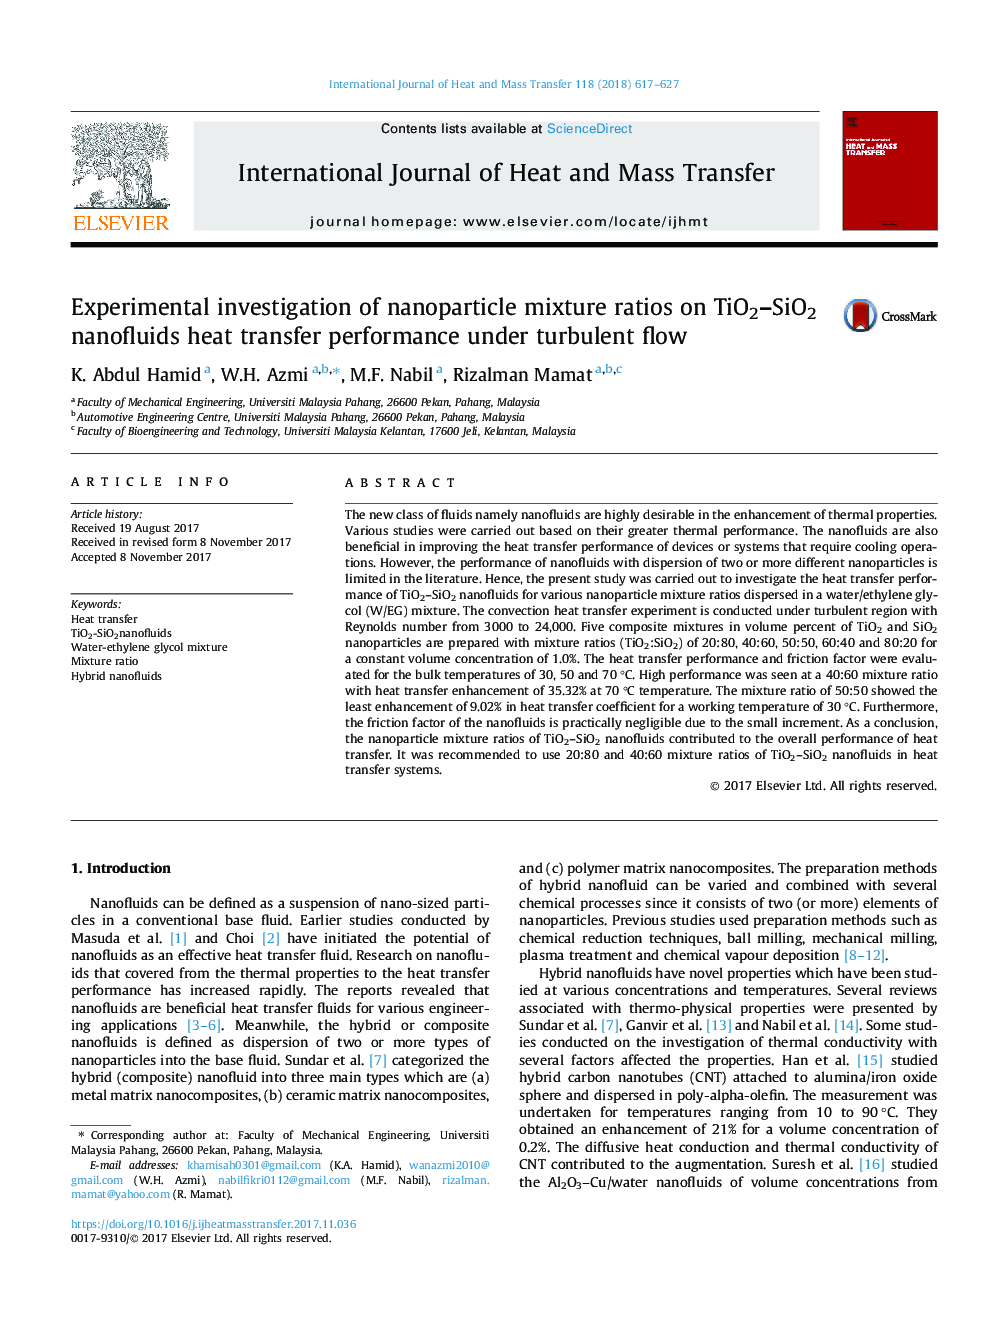 Experimental investigation of nanoparticle mixture ratios on TiO2-SiO2 nanofluids heat transfer performance under turbulent flow